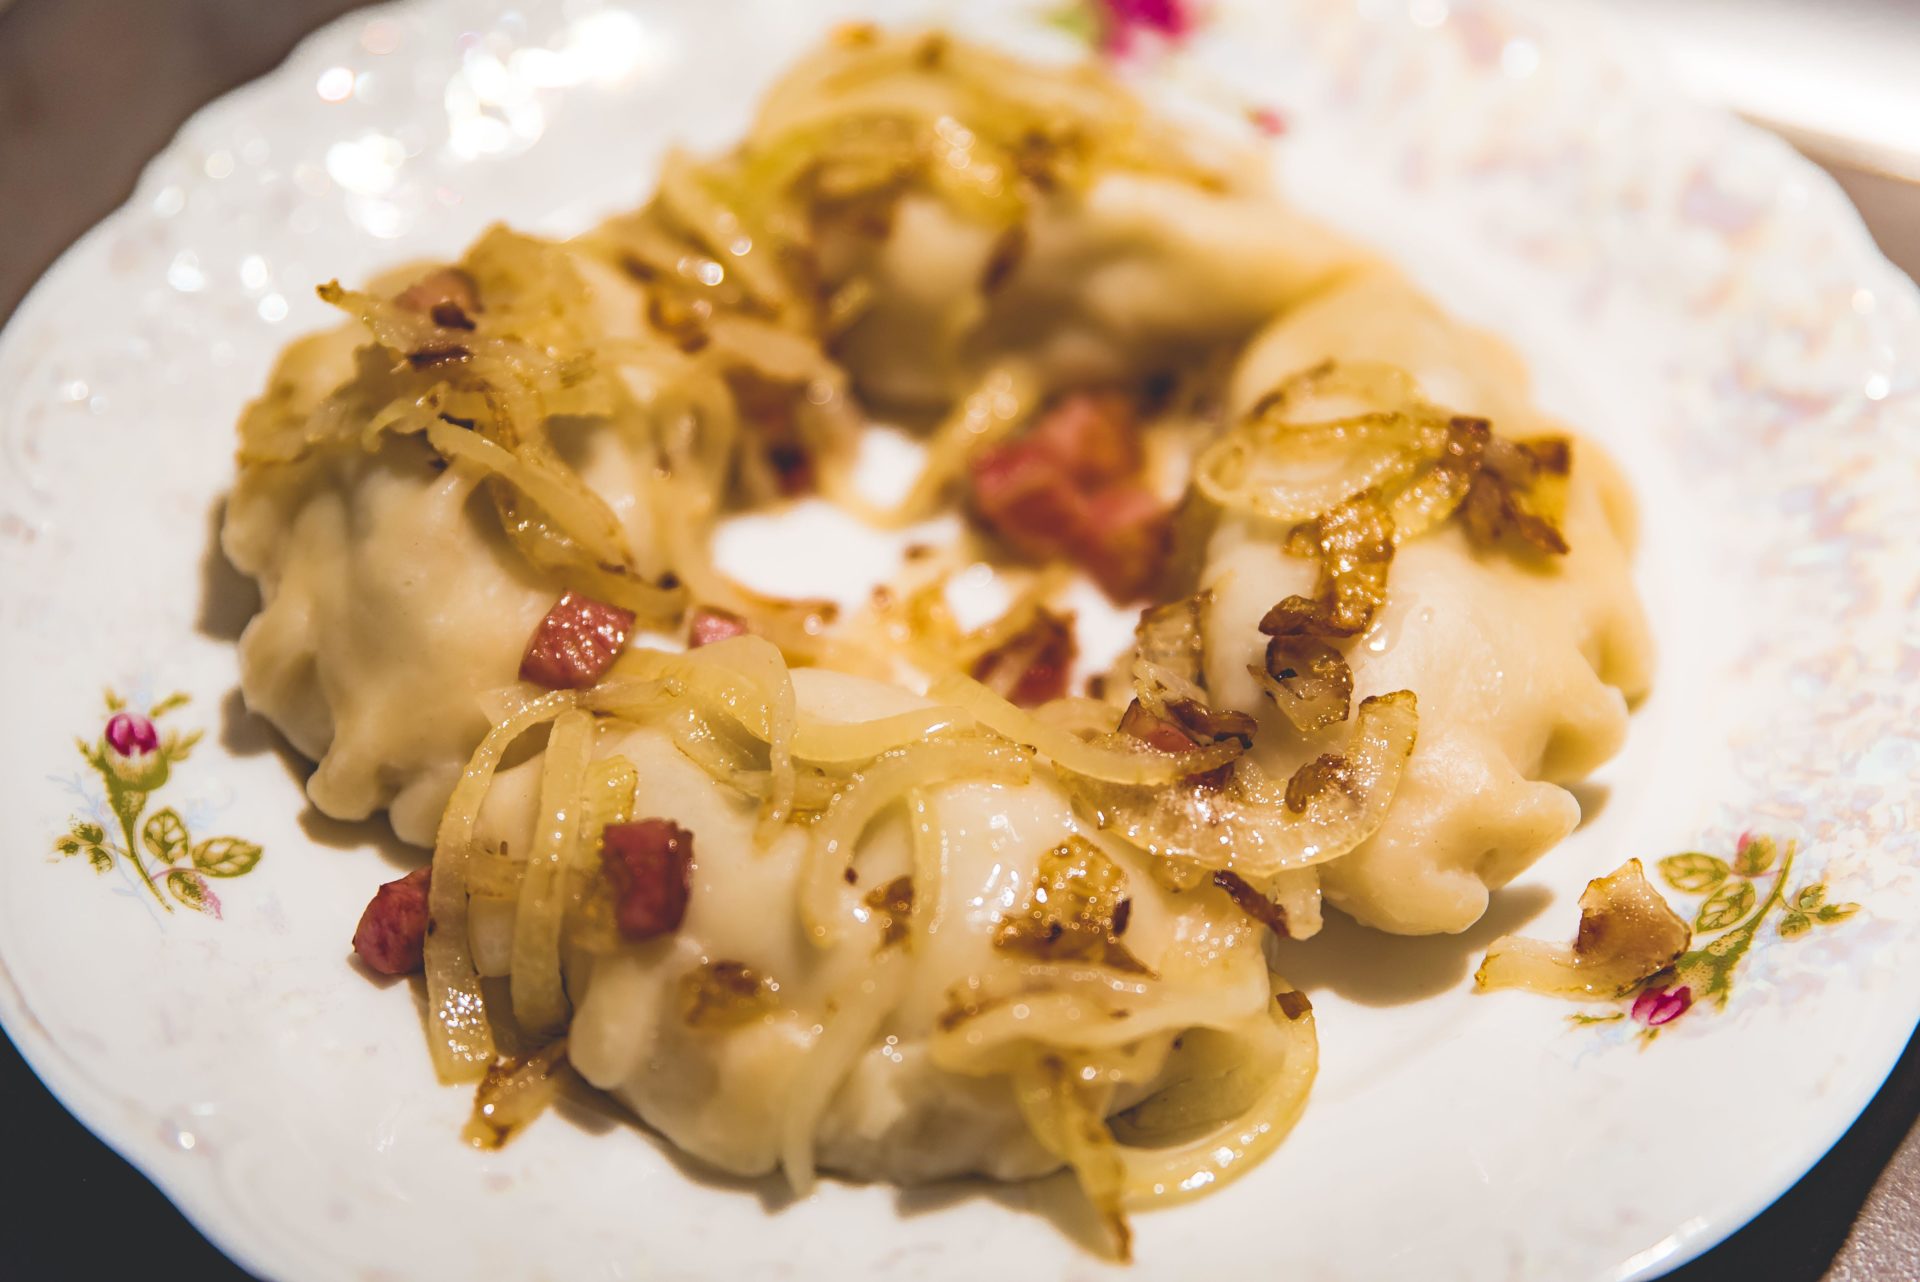 Traditional Polish homemade dumplings - pierogis - on a plate served with fried onion and baco